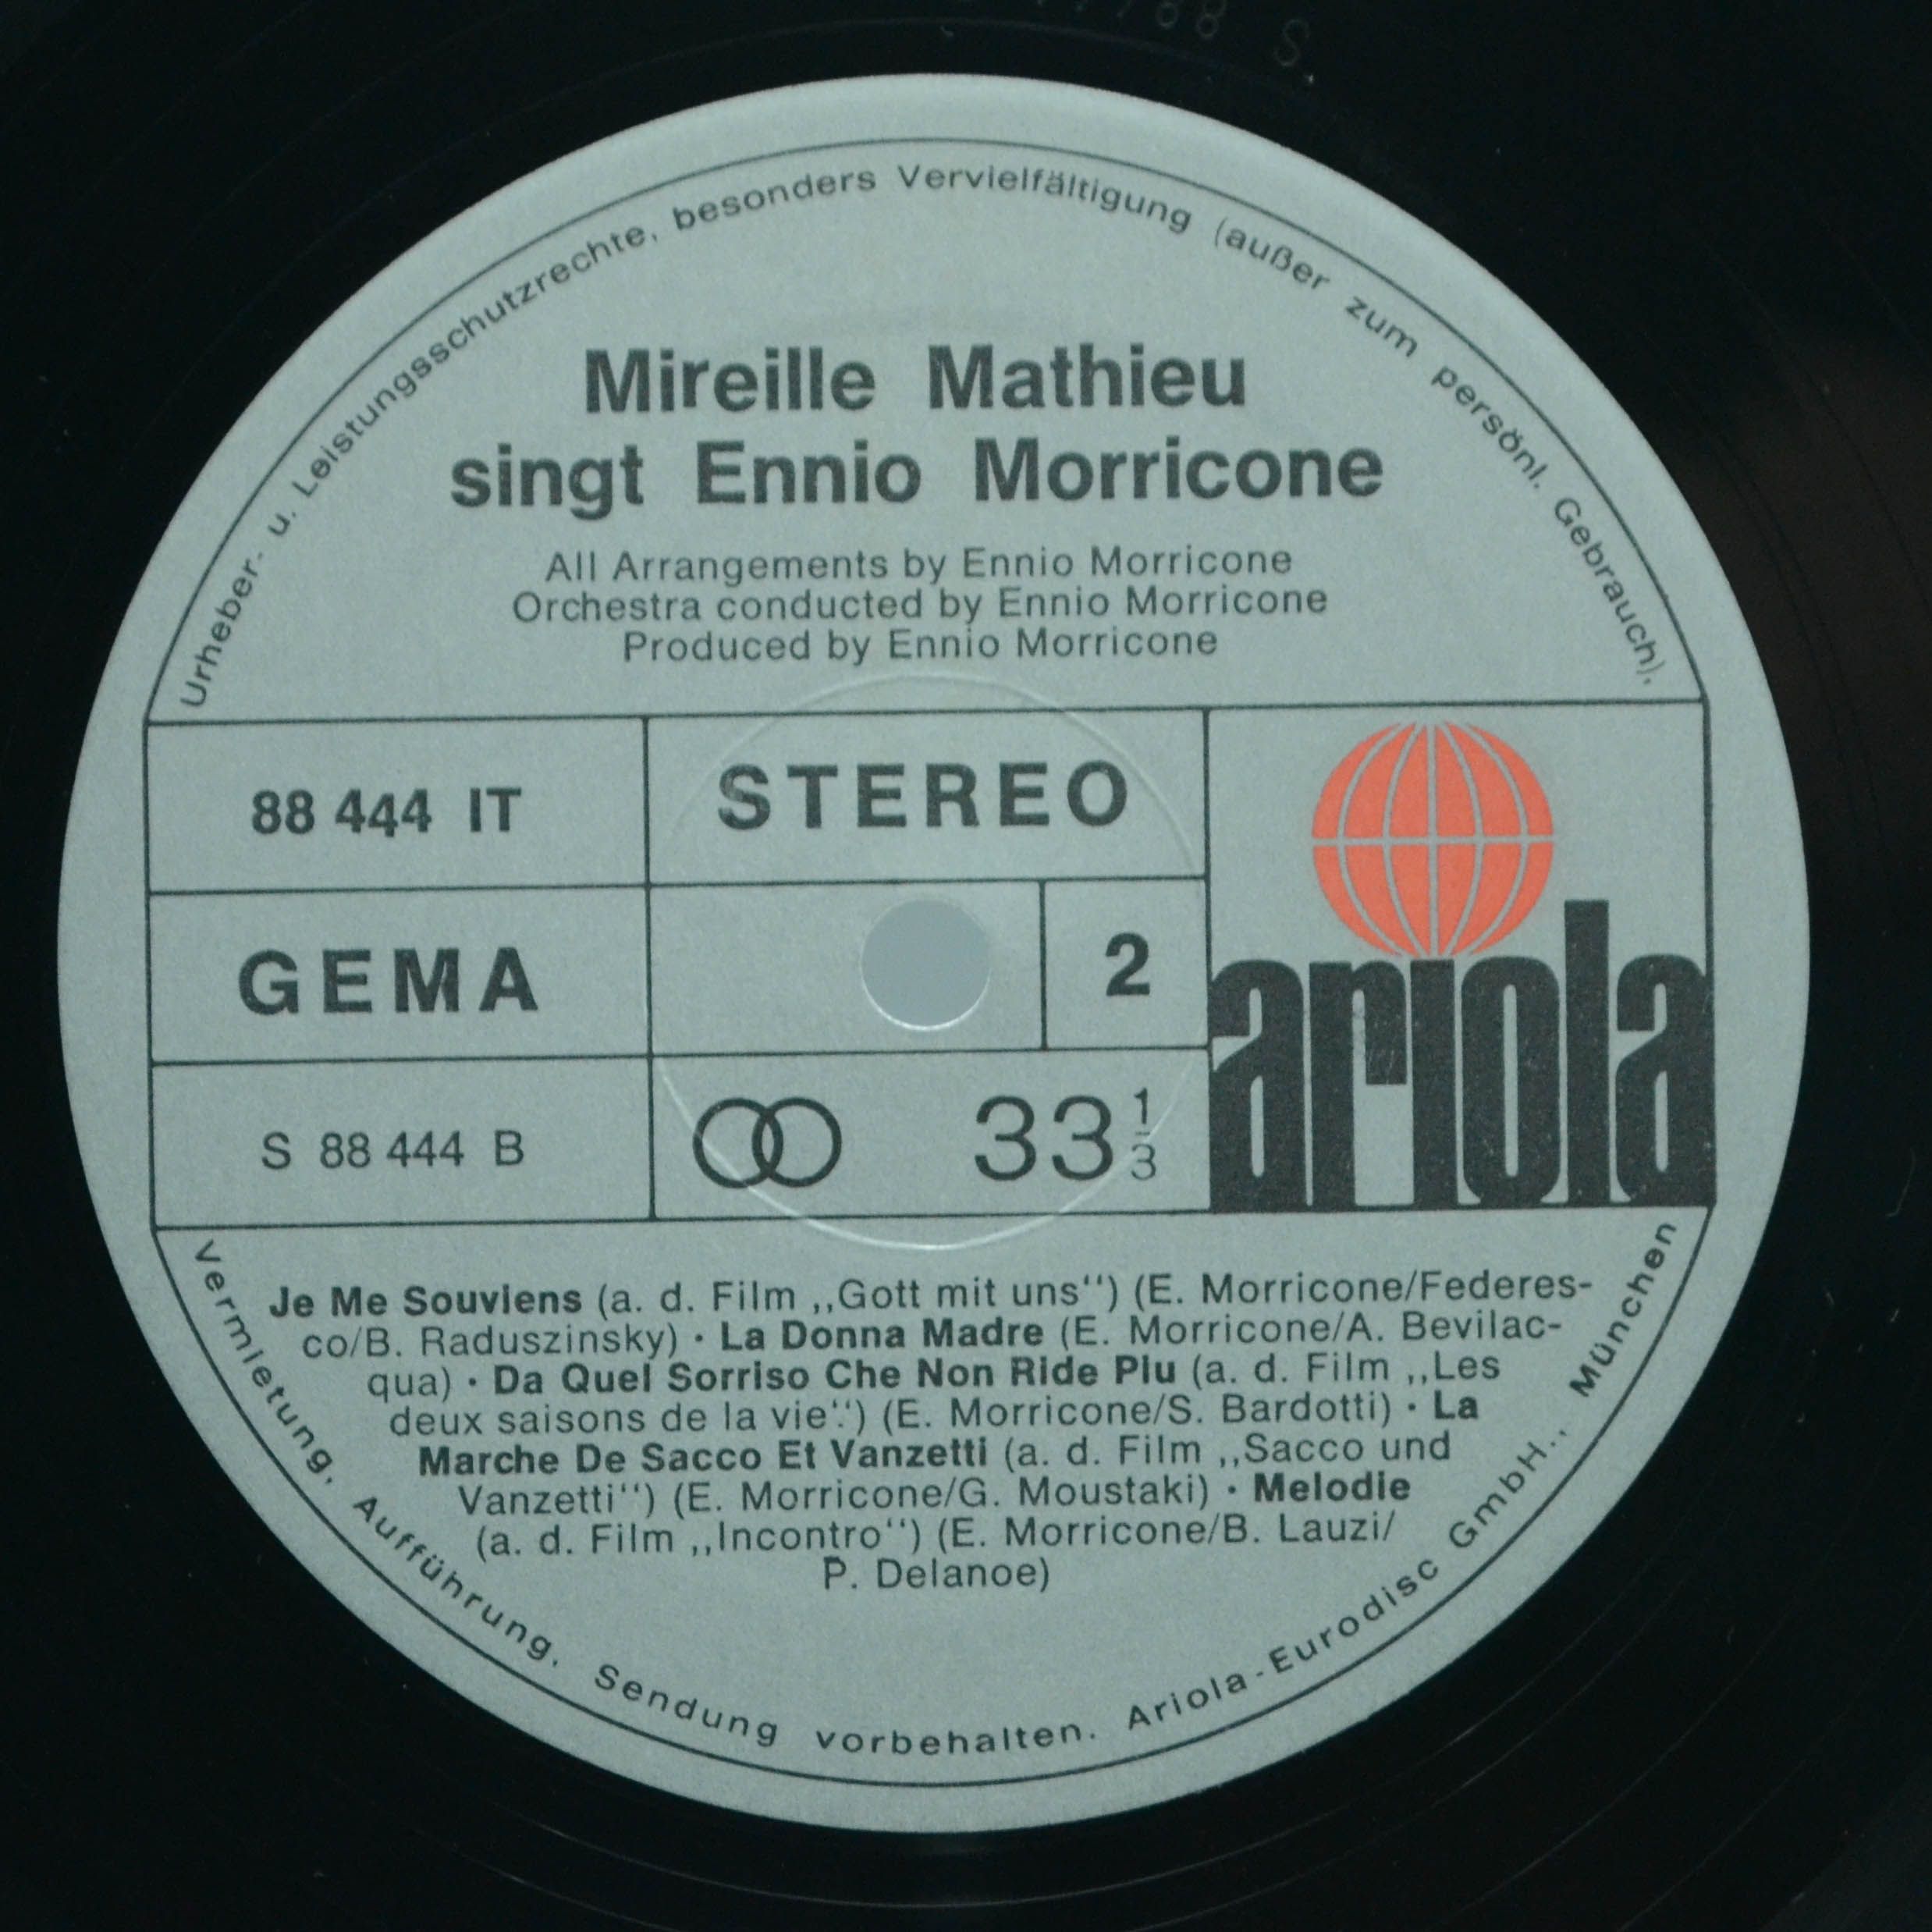 Mireille Mathieu / Ennio Morricone — Mireille Mathieu Singt Ennio Morricone, 1975